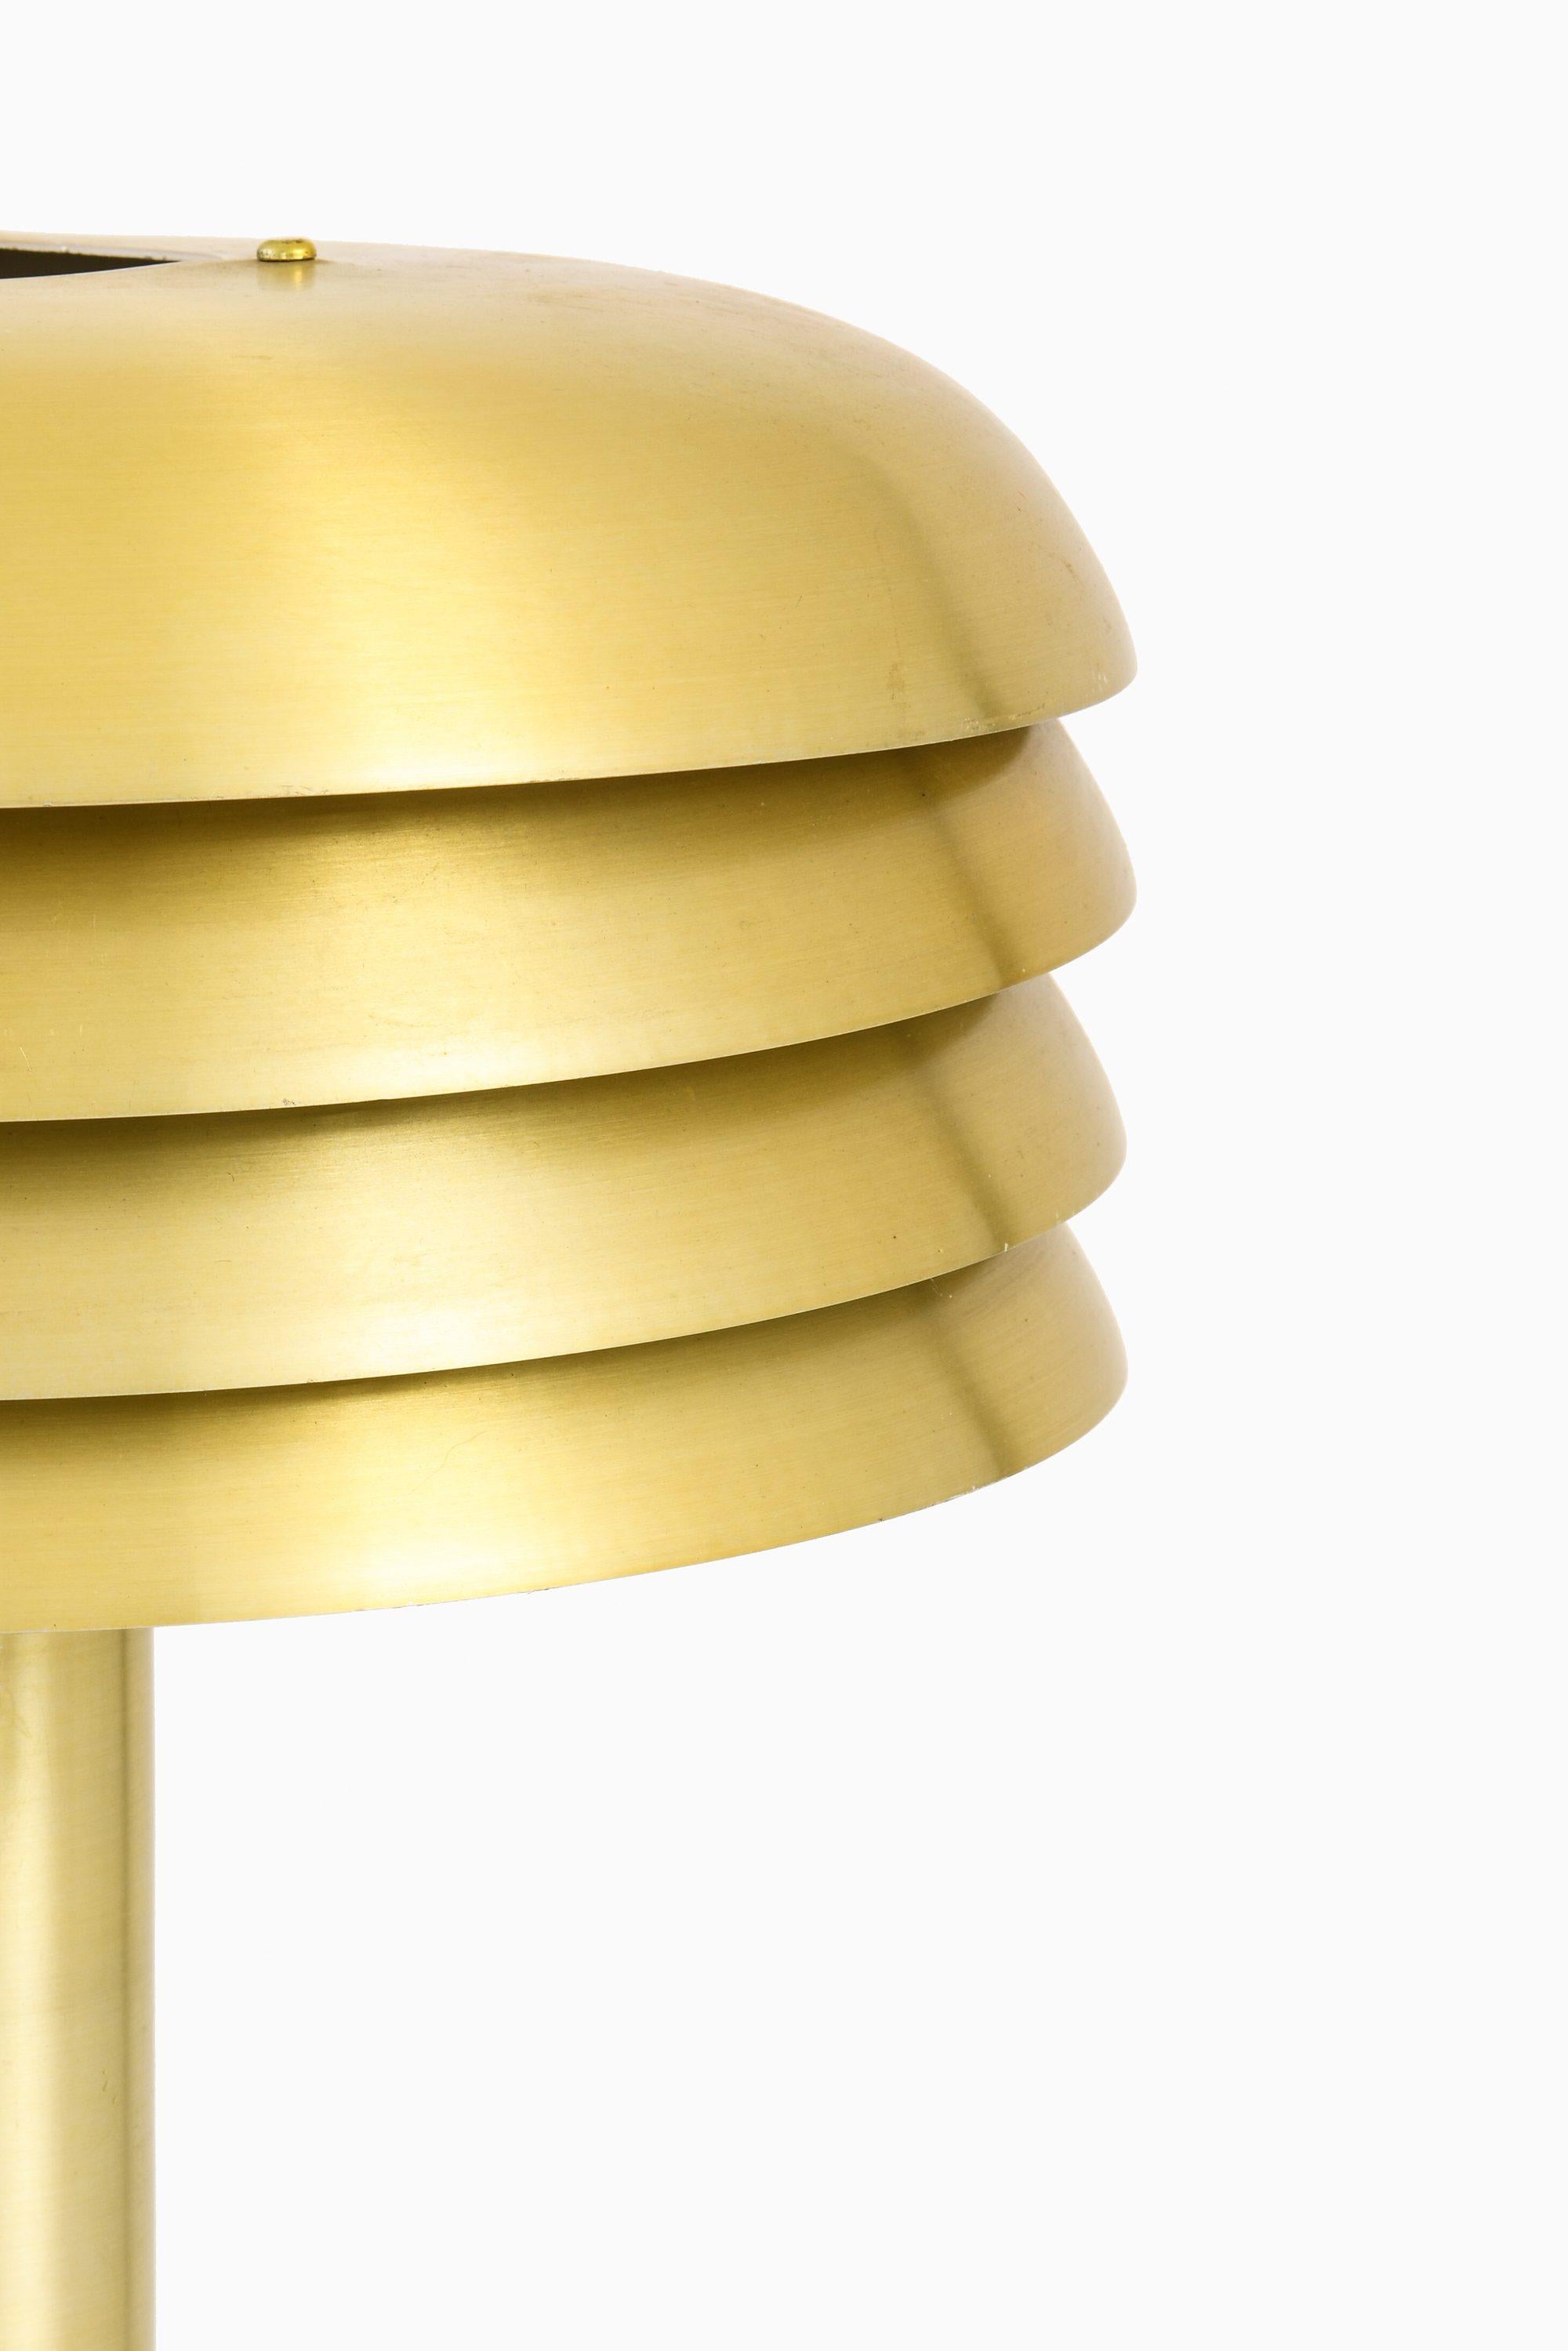 Scandinavian Modern Pair of Scandinavian Table Lamps in Brass by Hans-Agne Jakobsson, 1950's For Sale